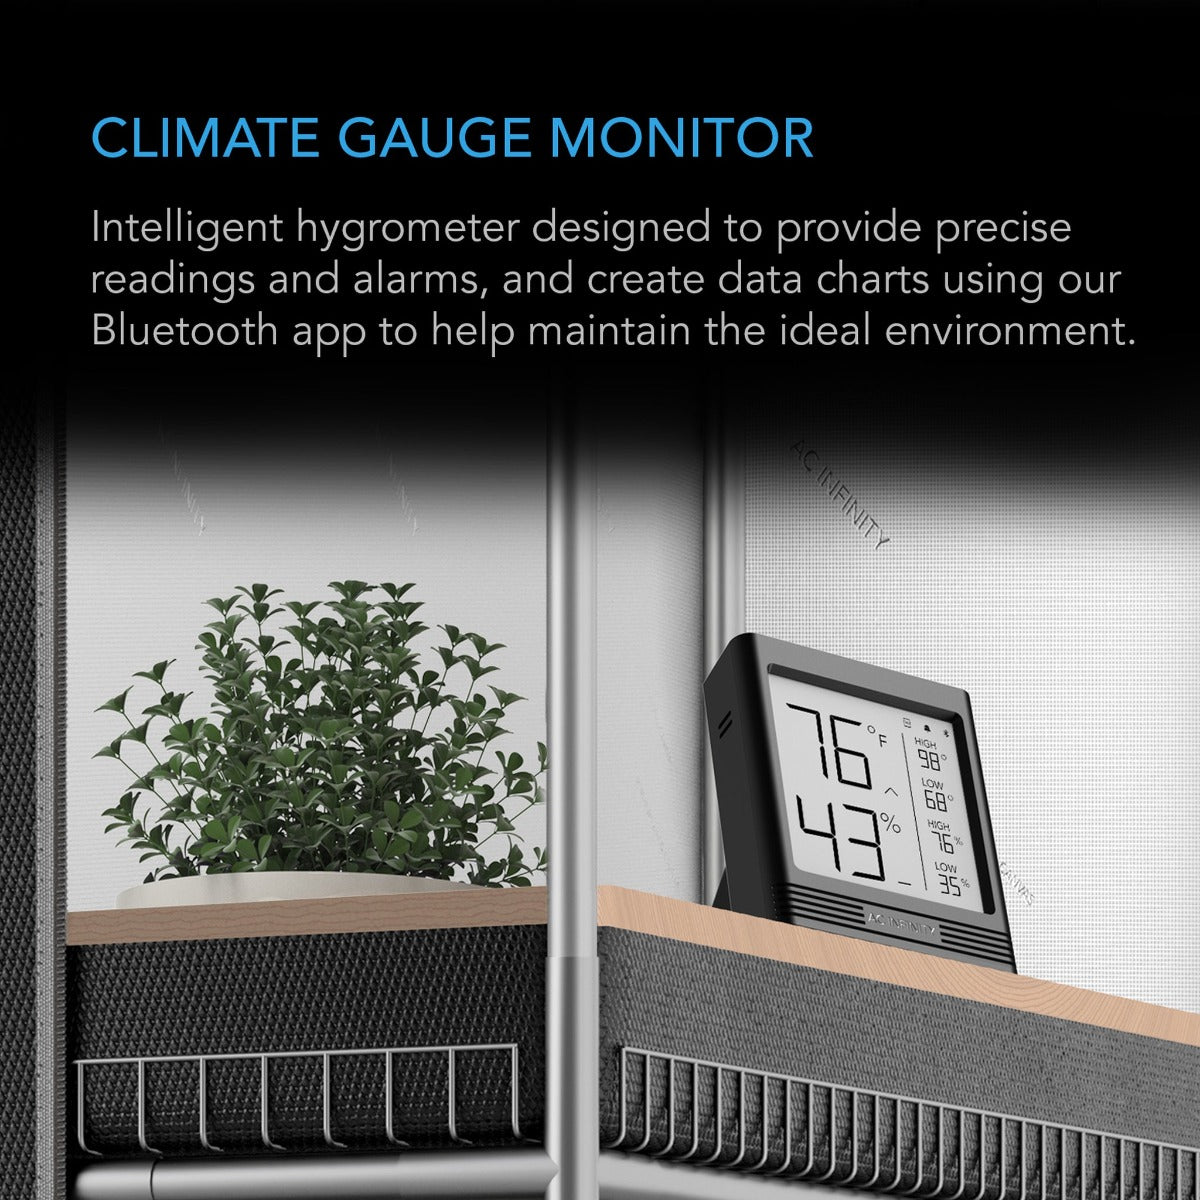 AC Infinity Cloudcom B2 Climate Gauge monitor